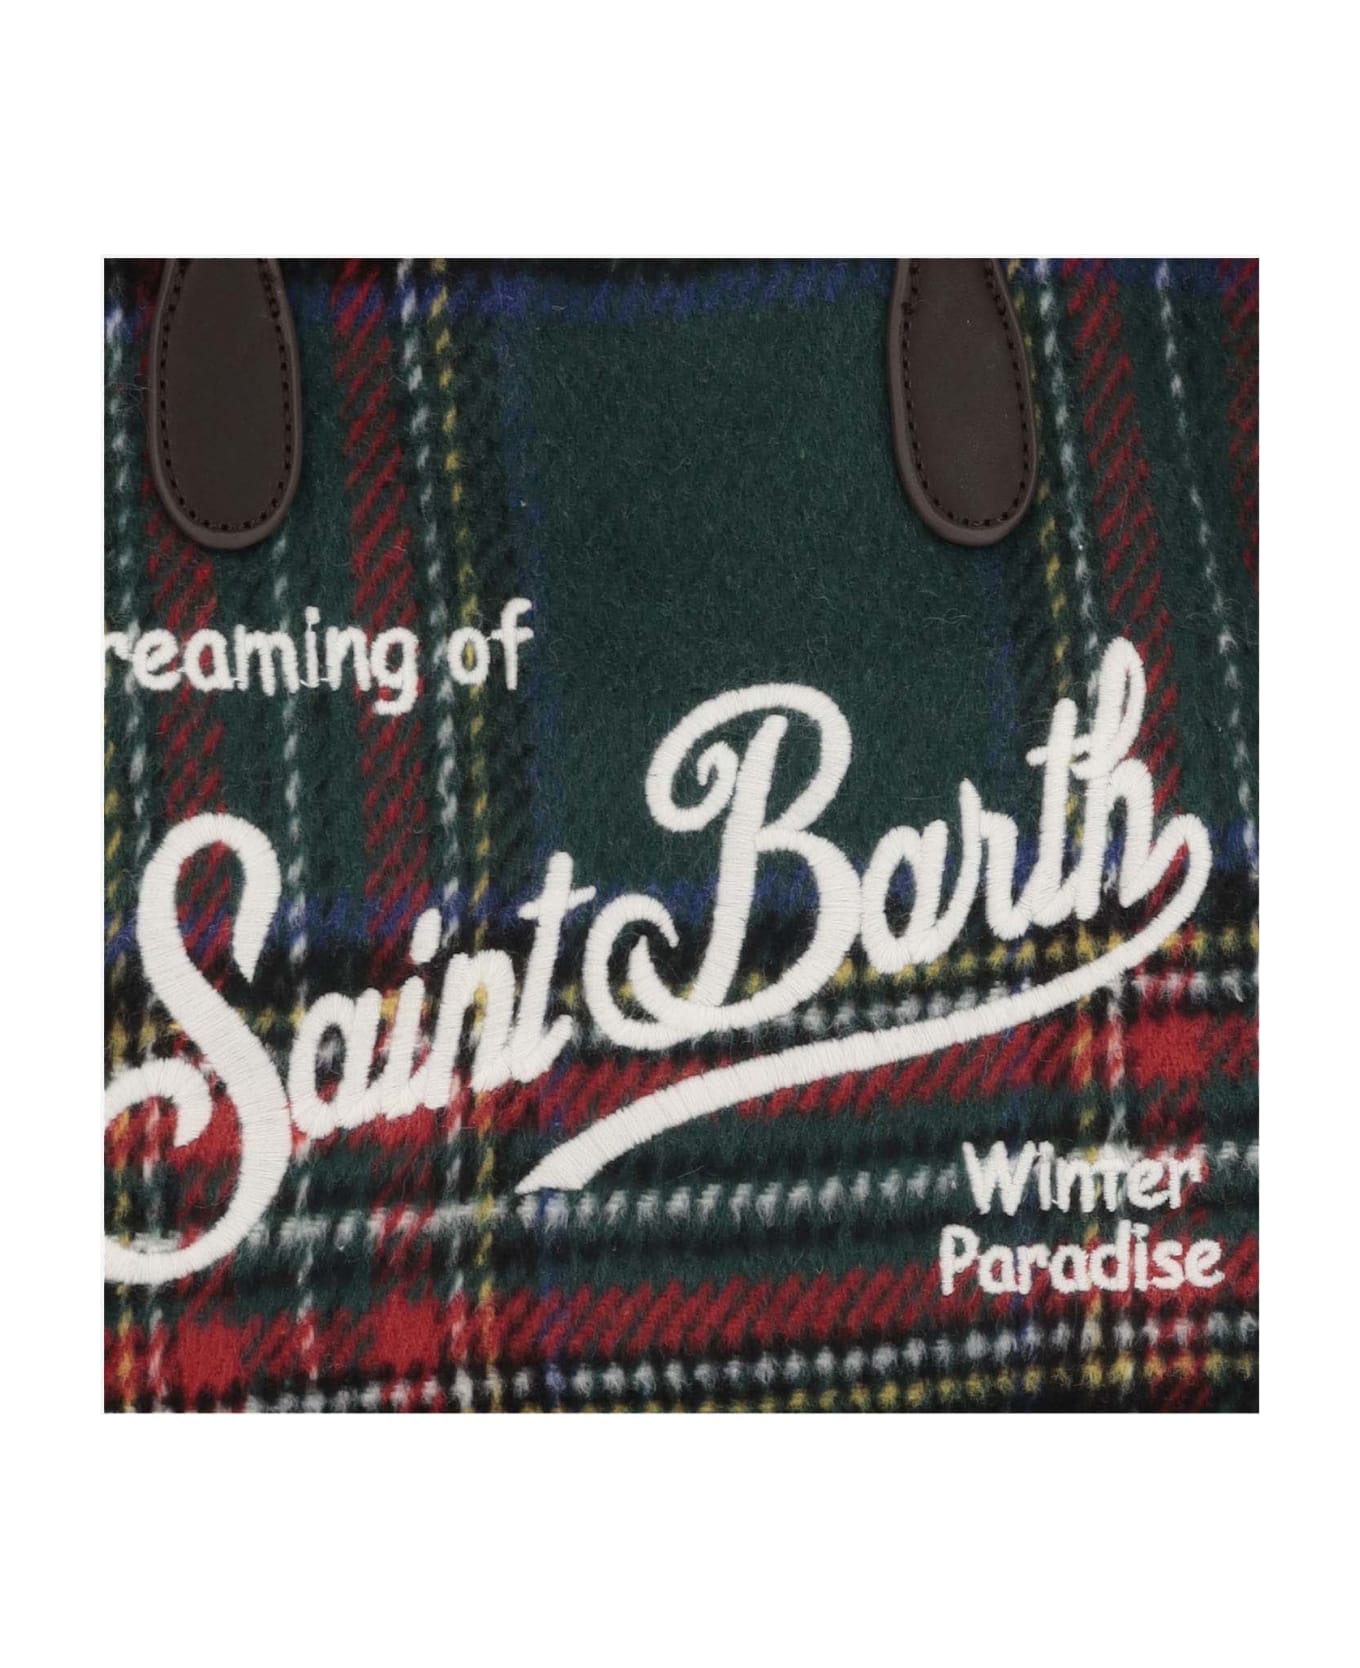 MC2 Saint Barth Colette Tricot Bag With Logo トートバッグ